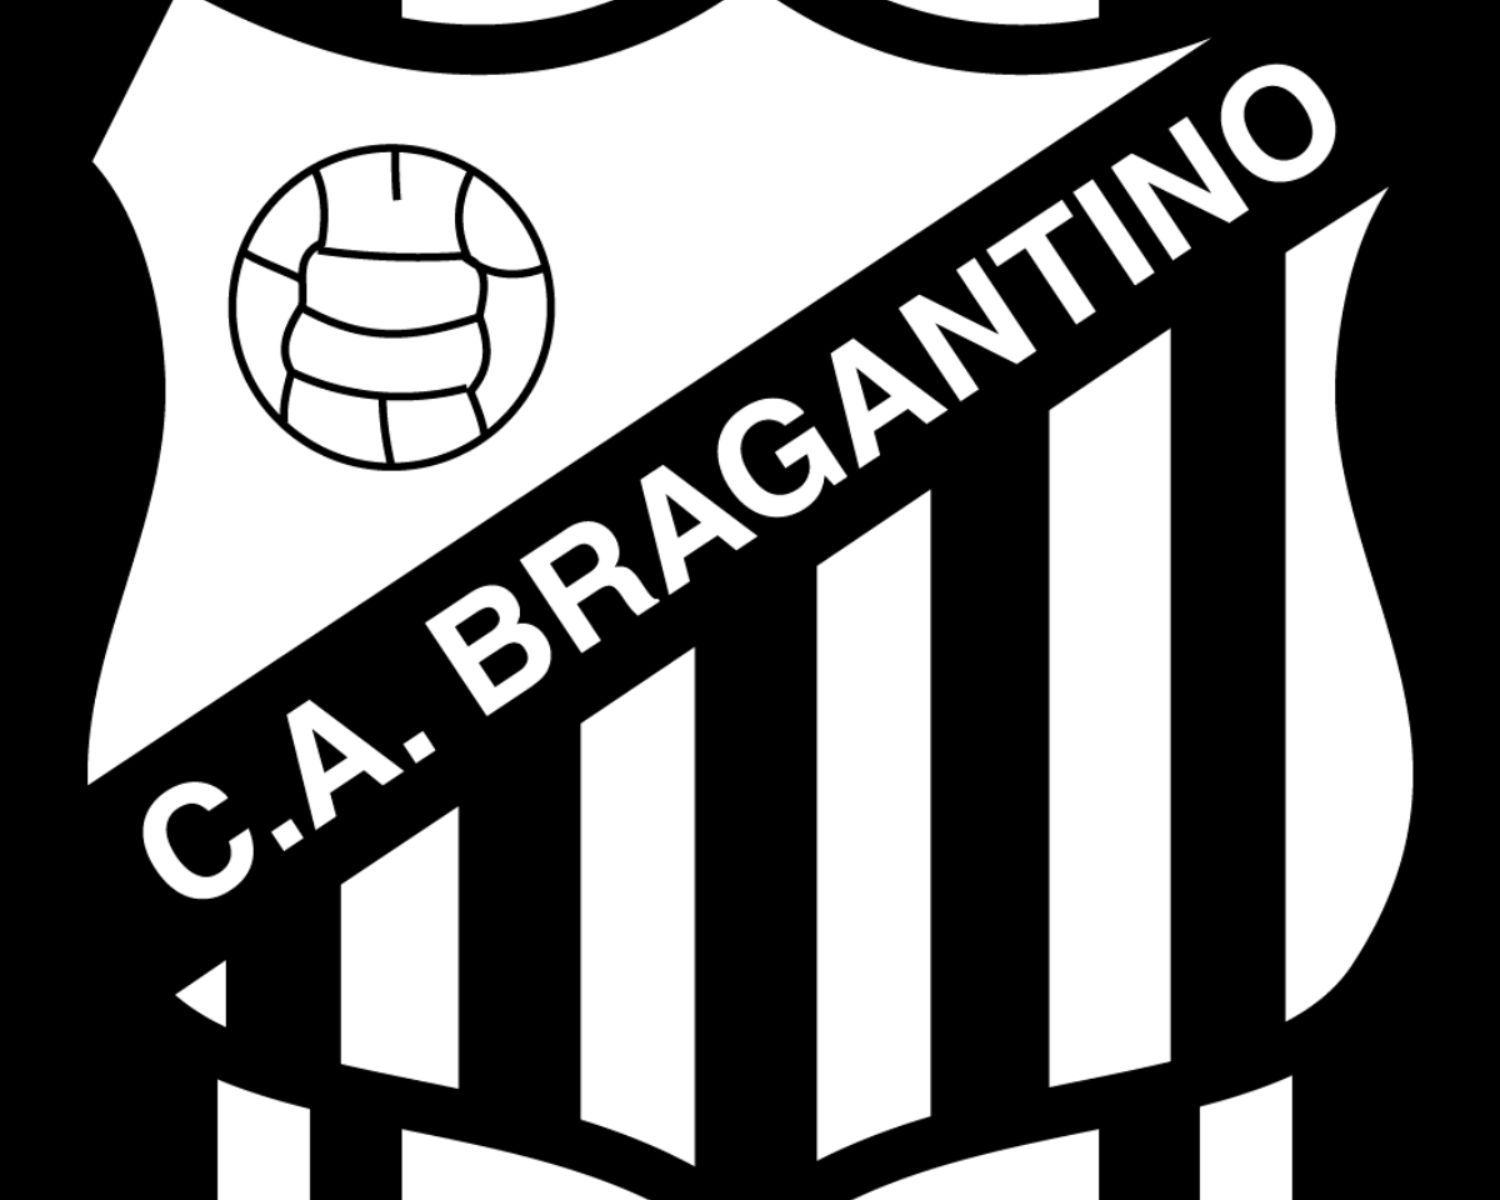 Ca Bragantino: 14 Football Club Facts - Facts.net